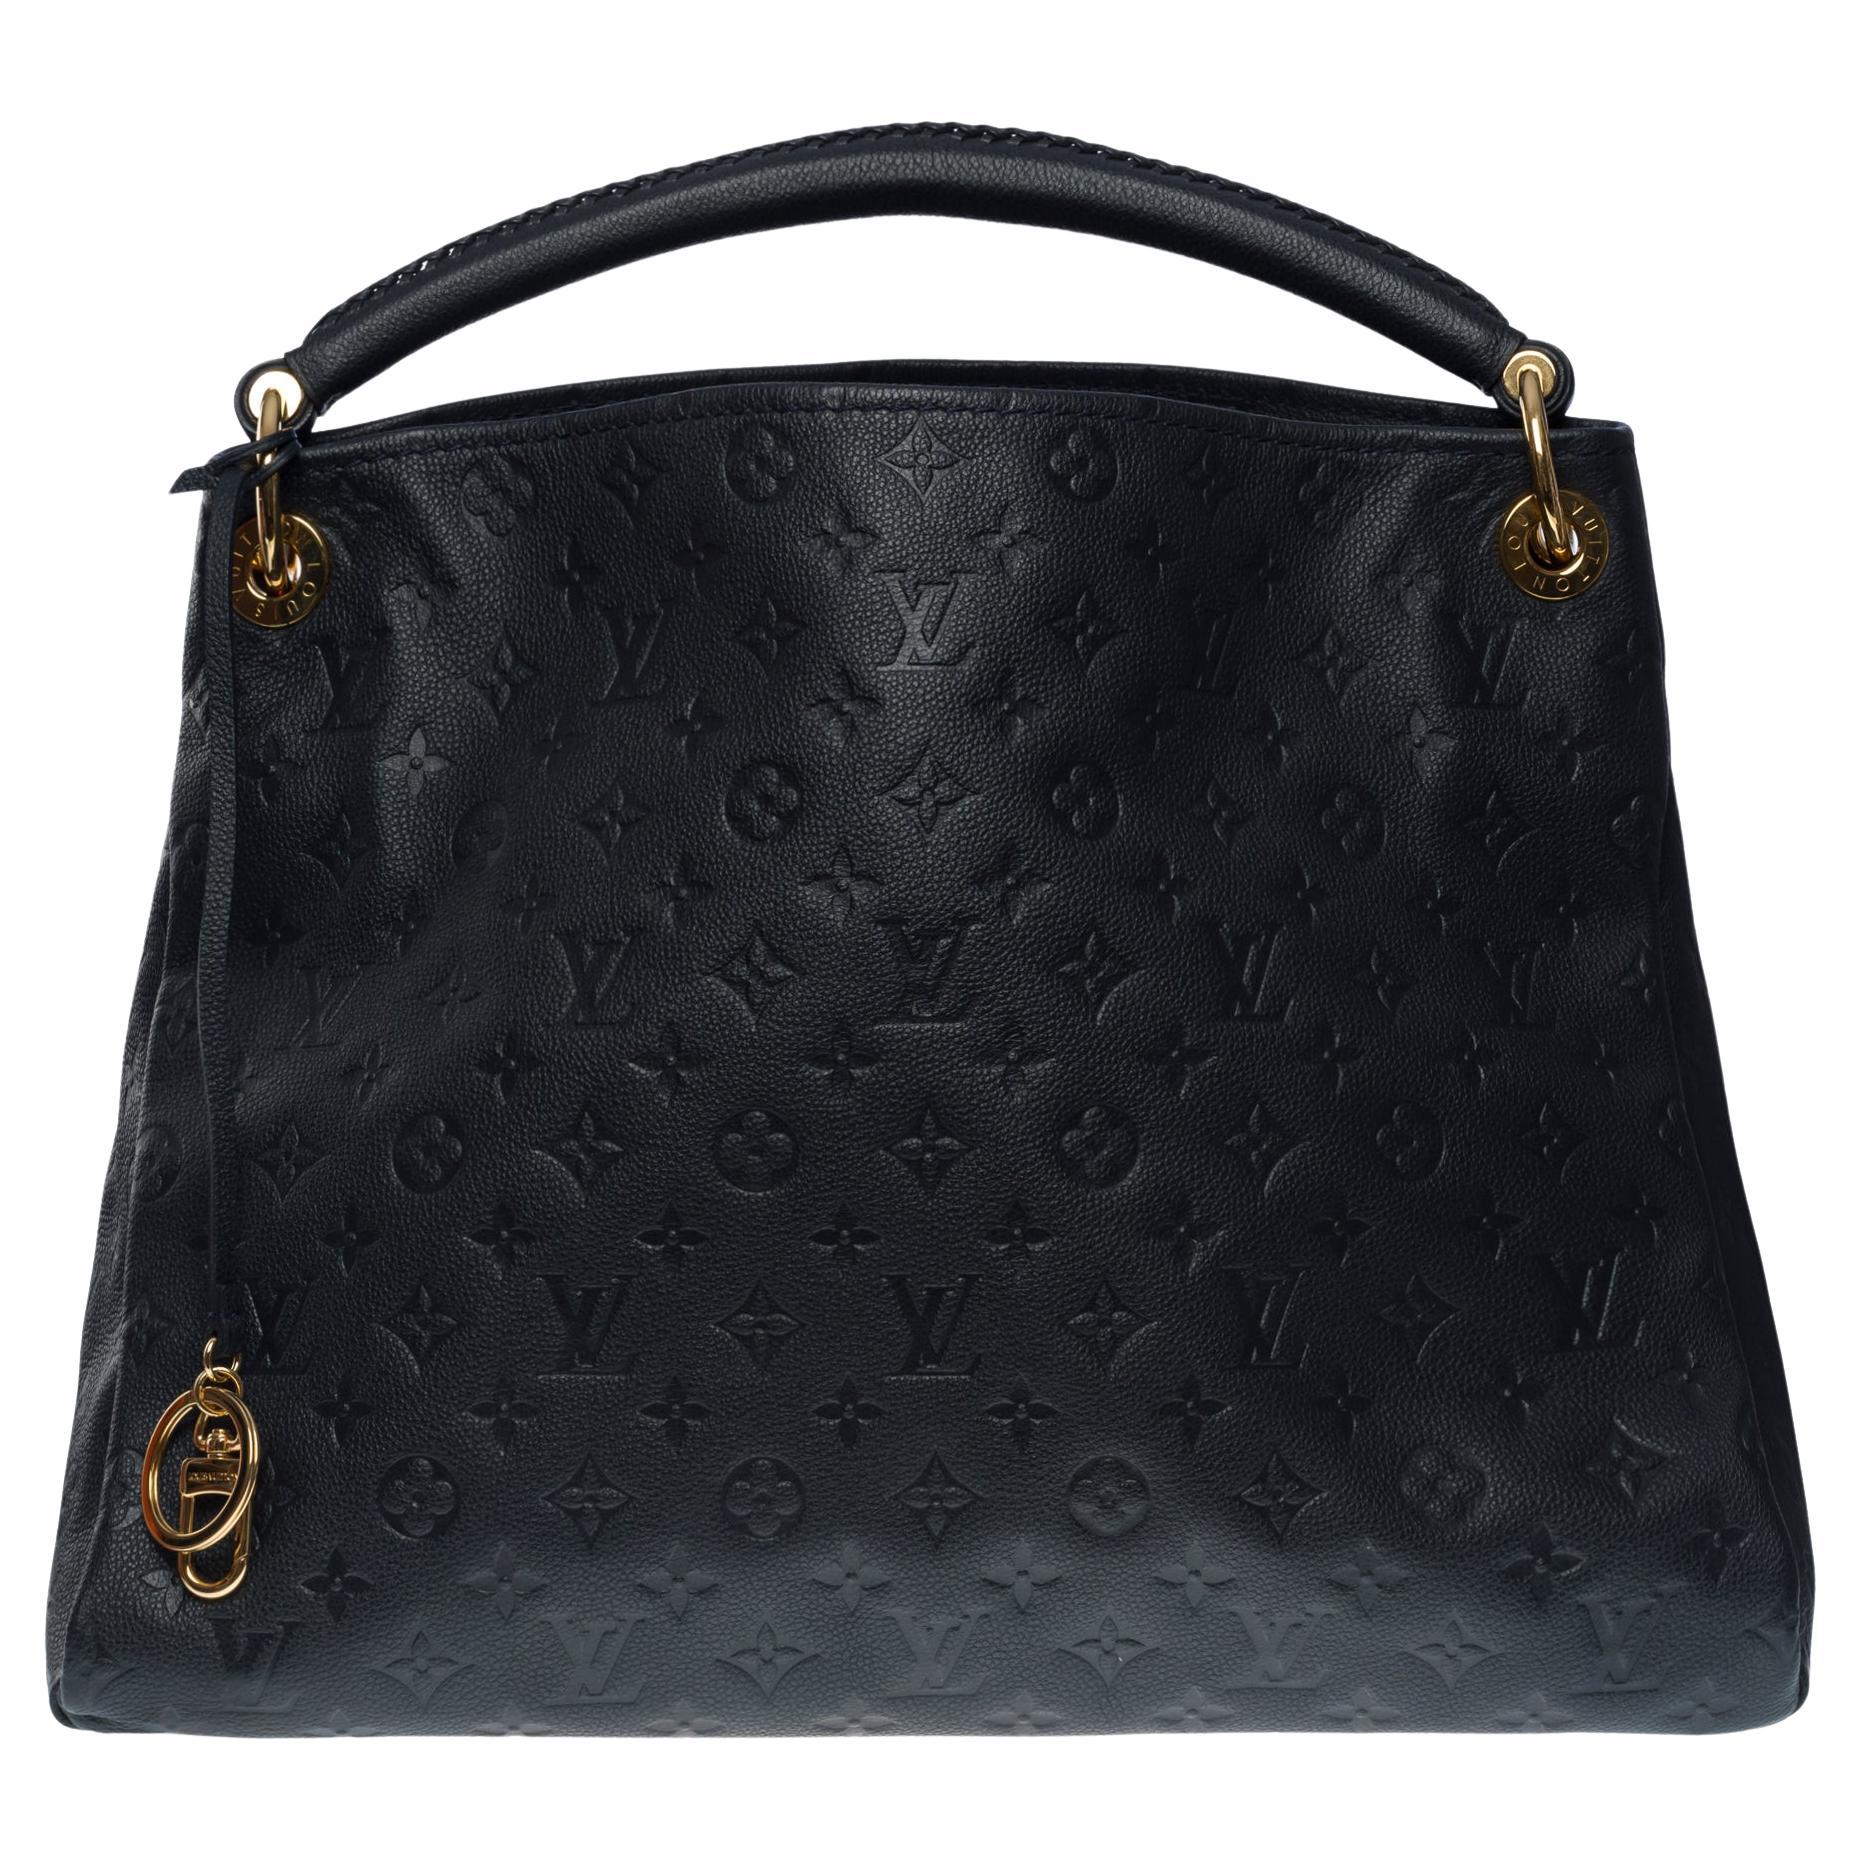 Louis Vuitton Artsy MM Hobo bag in dark blue monogram calfskin leather, GHW For Sale